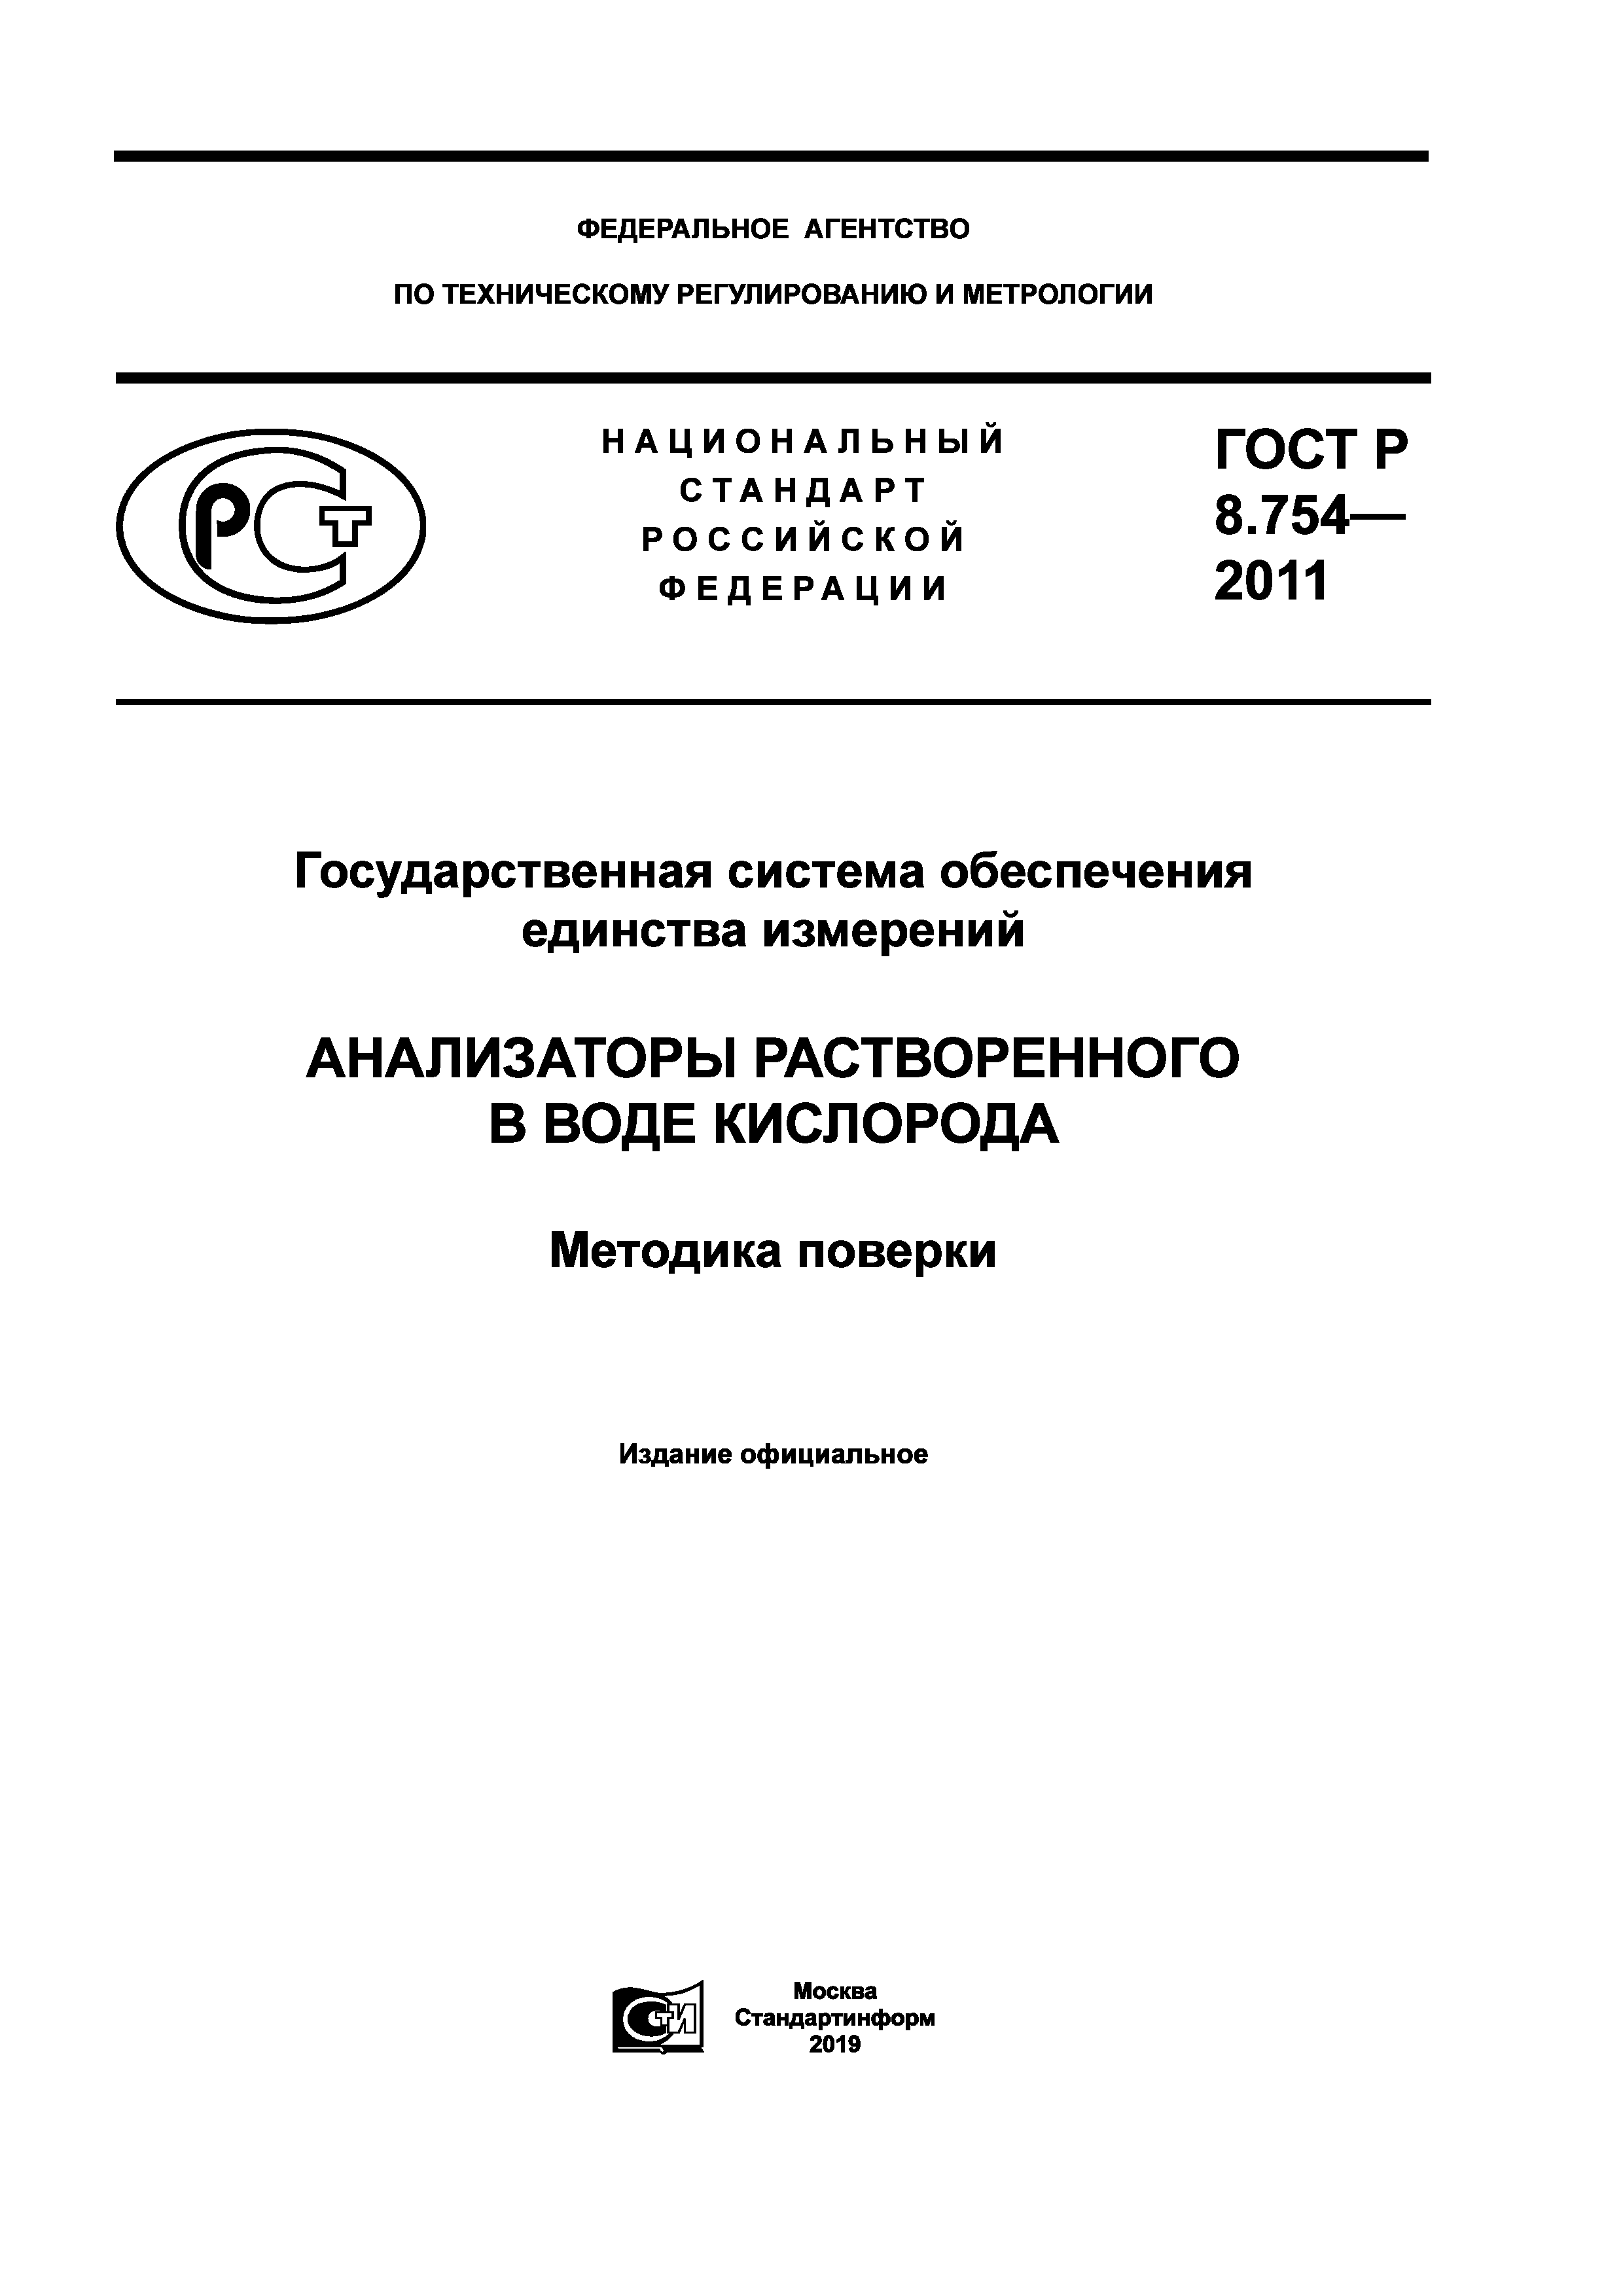 ГОСТ Р 8.754-2011